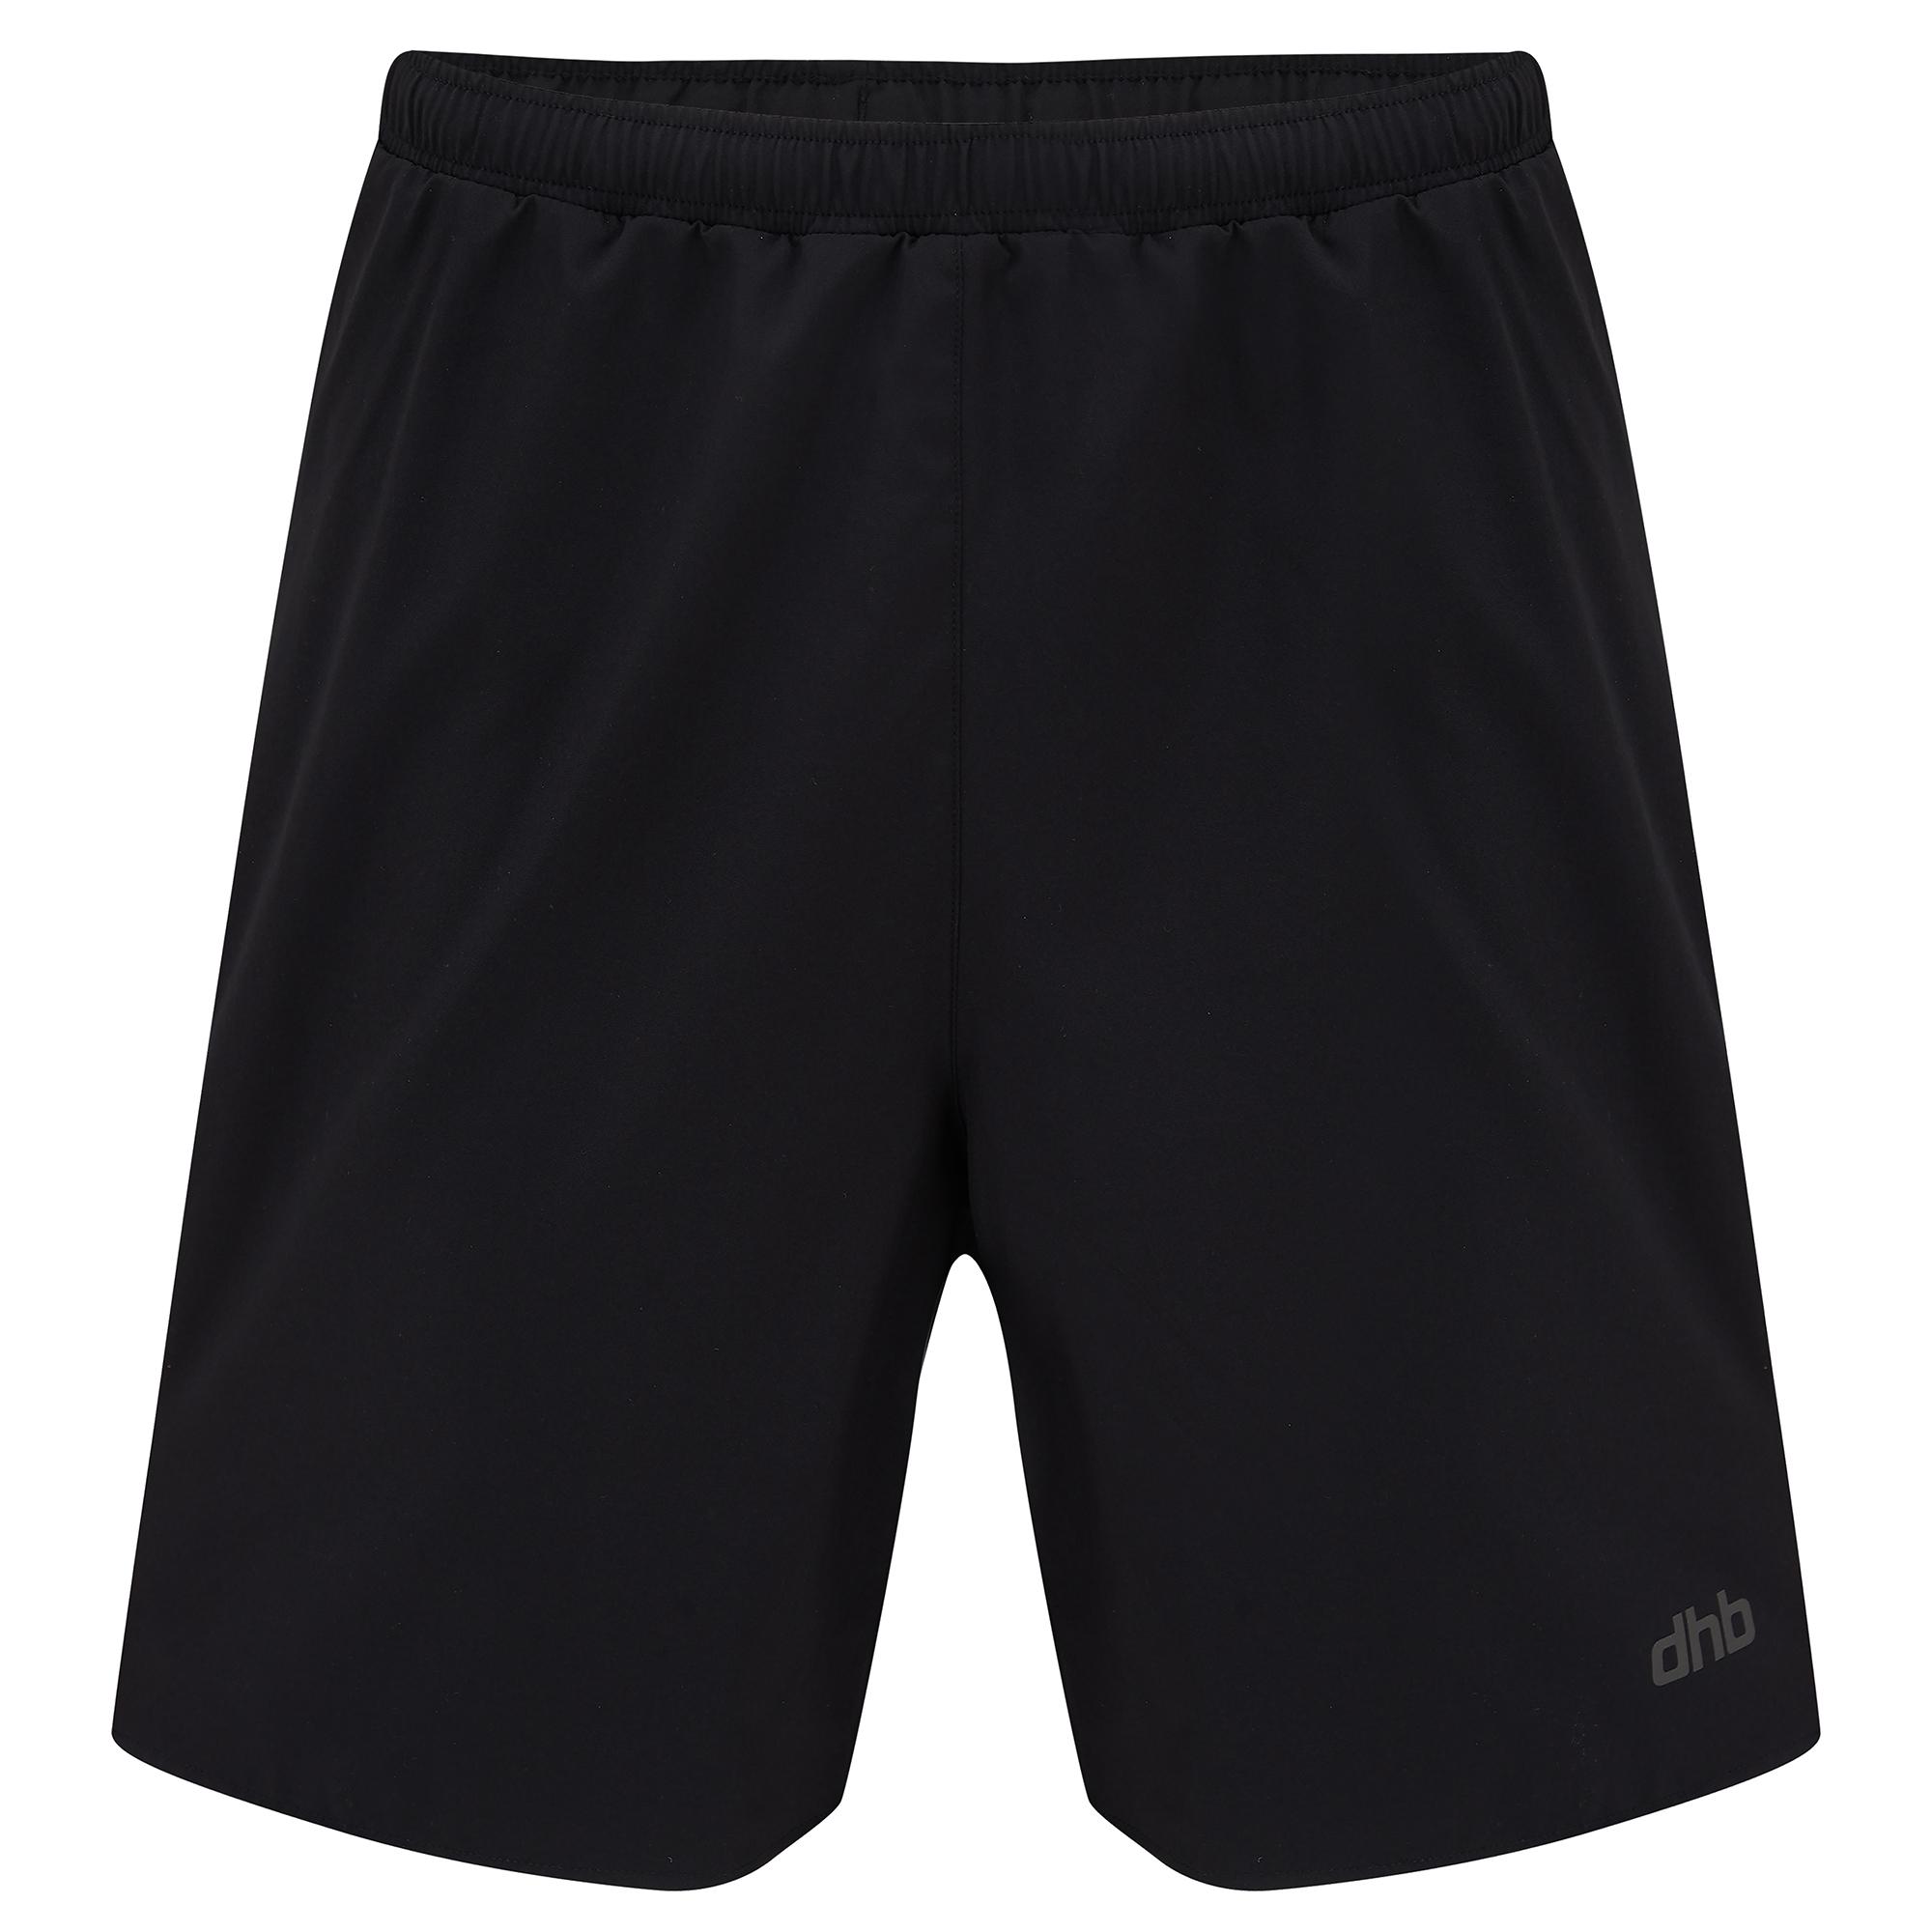 Dhb 7 Run Shorts - Black